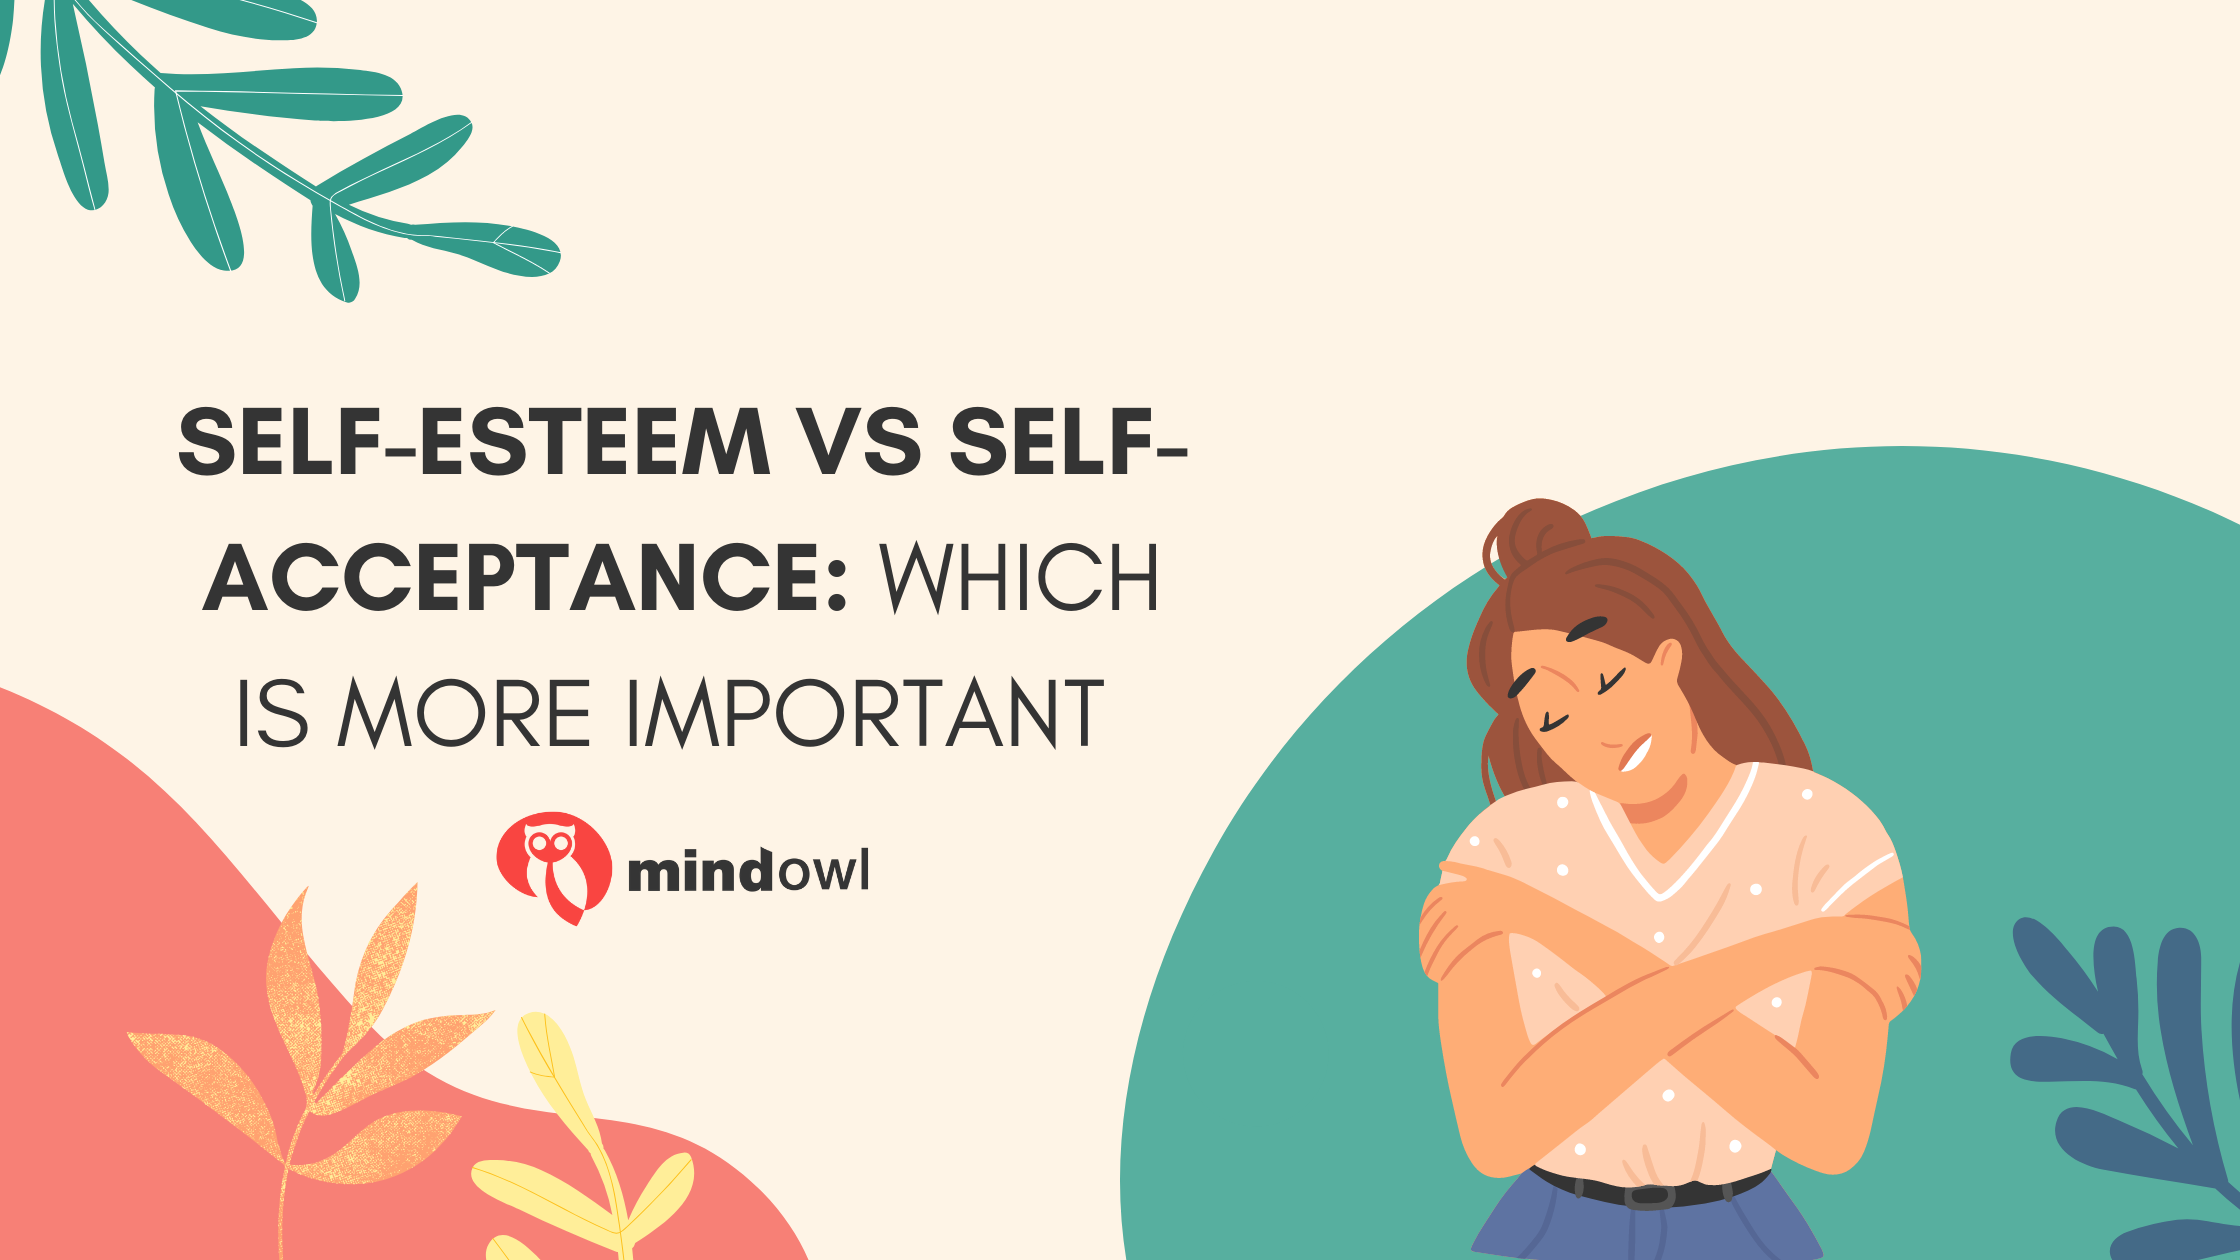 Self-esteem vs self-acceptance: Which is more important?